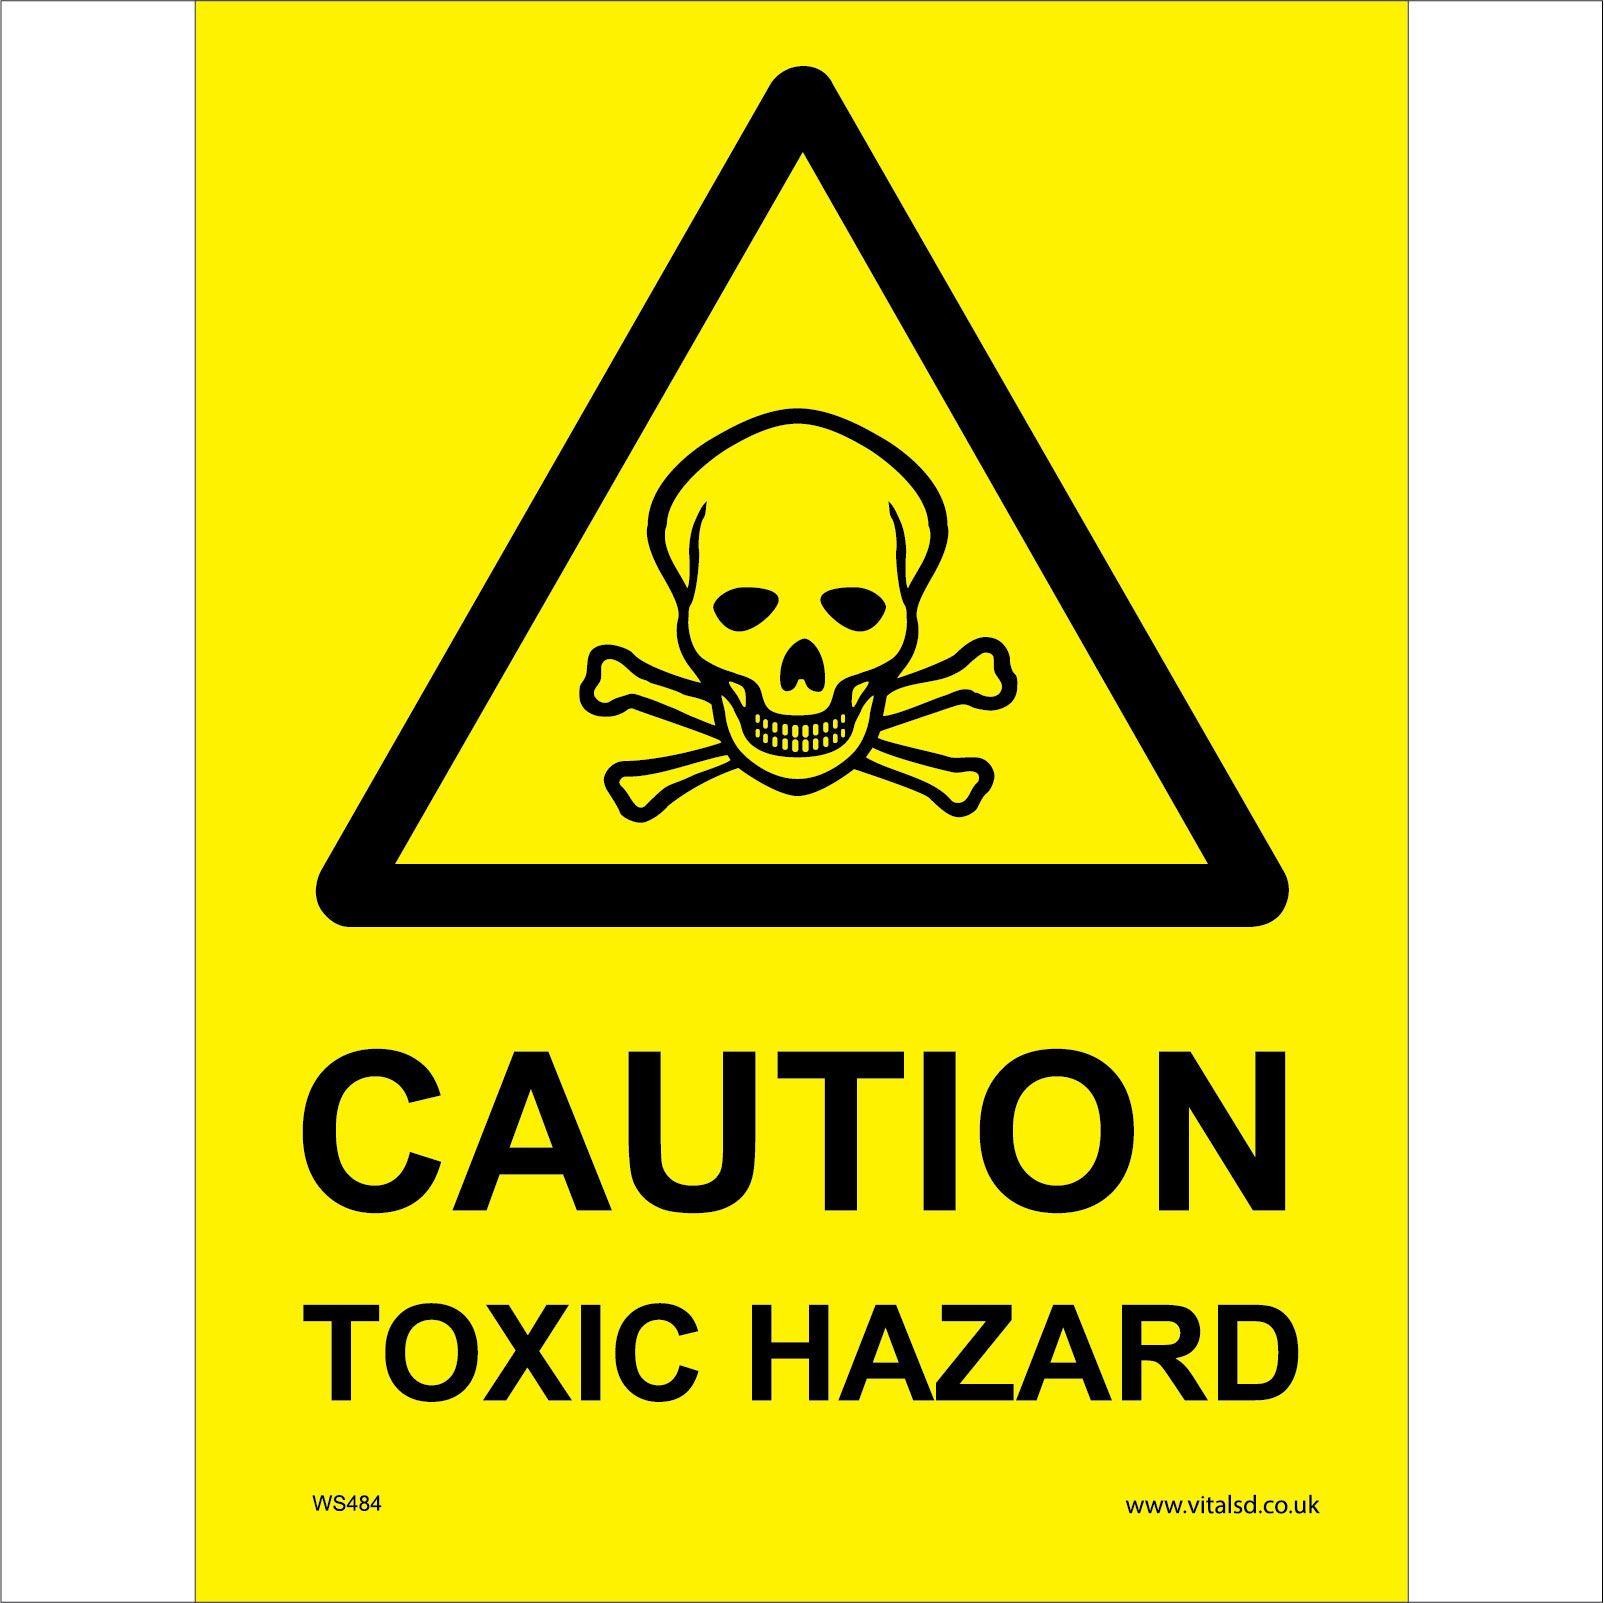 WS484 Caution Toxic Hazard Warning Signs - Warning Signs - WARNING